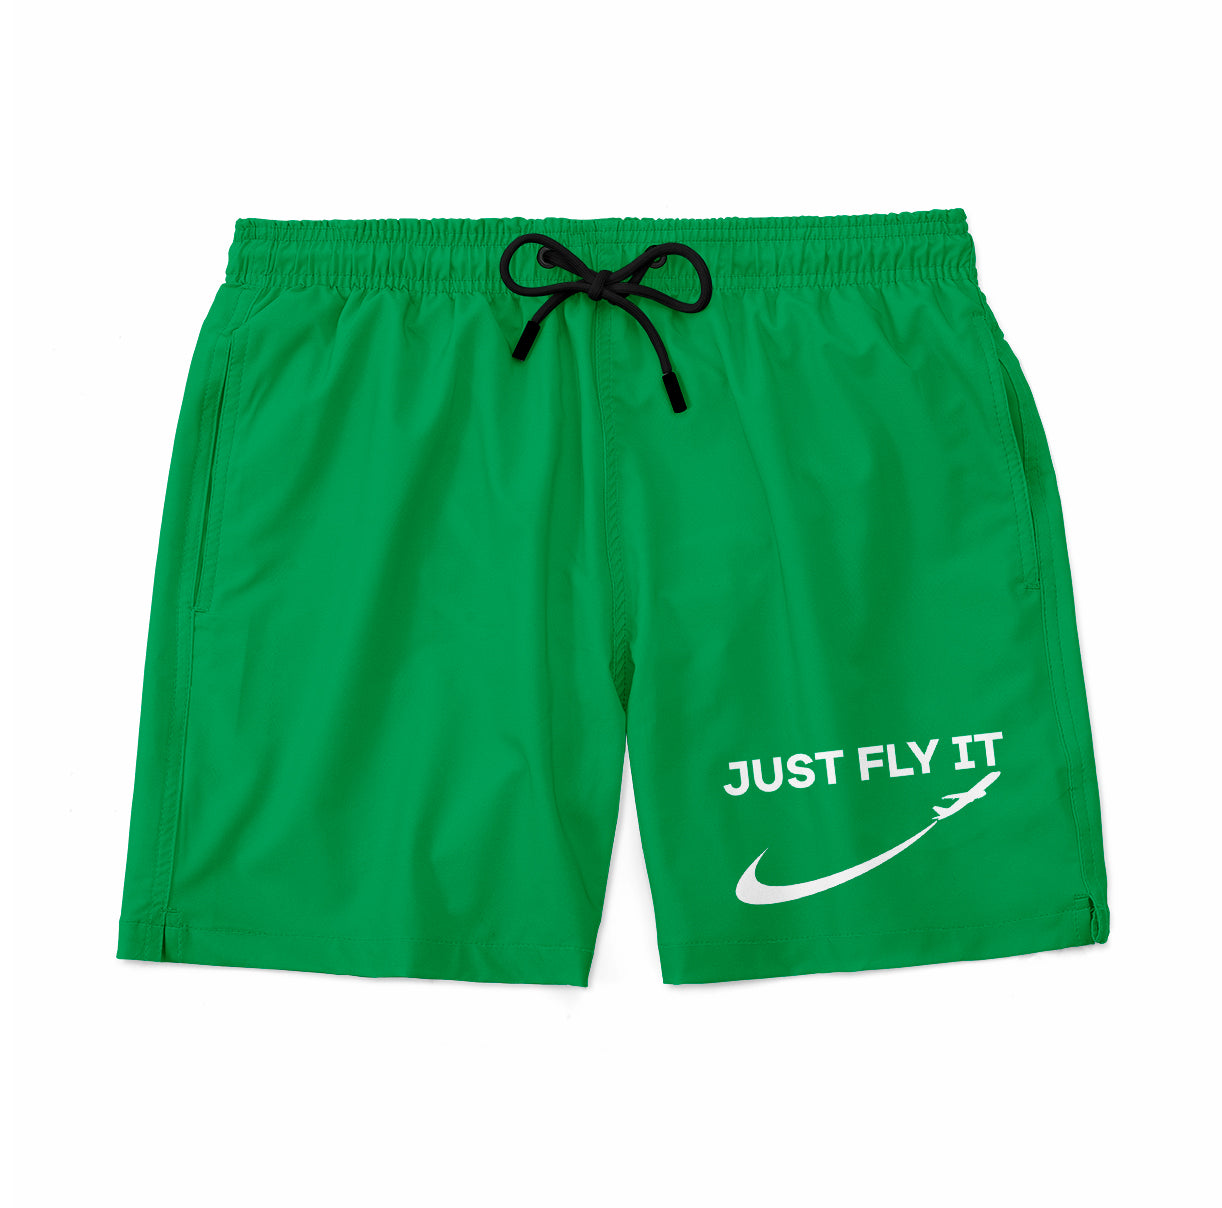 Just Fly It 2 Designed Swim Trunks & Shorts